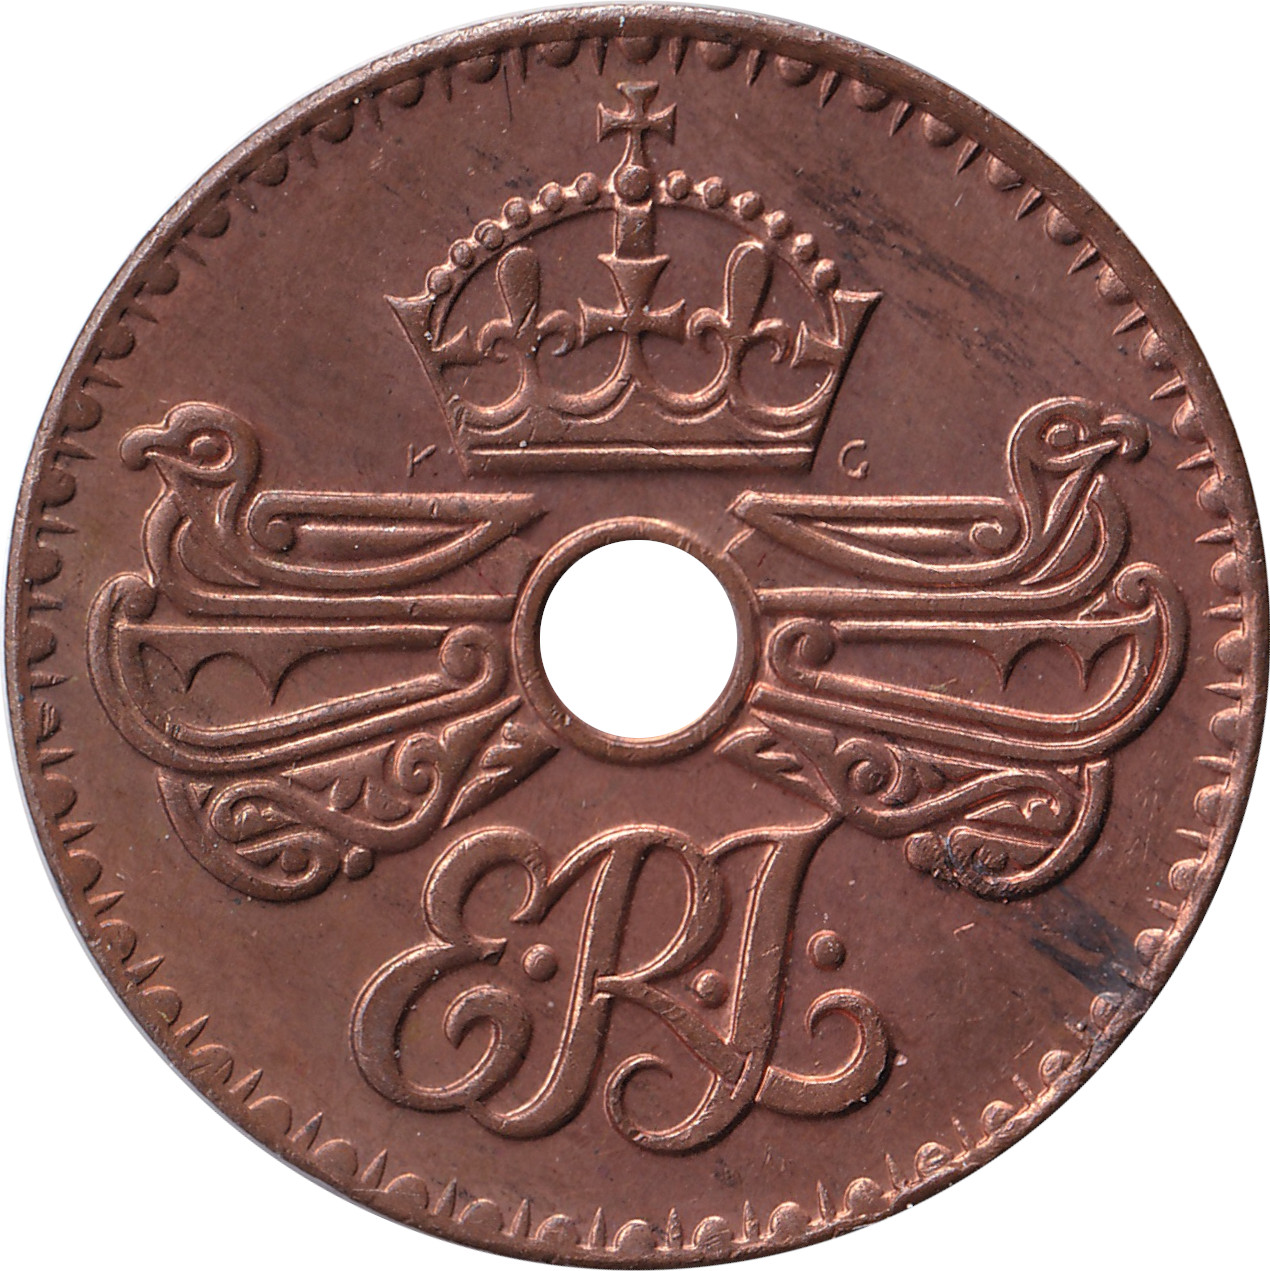 1 penny - George V - Canard